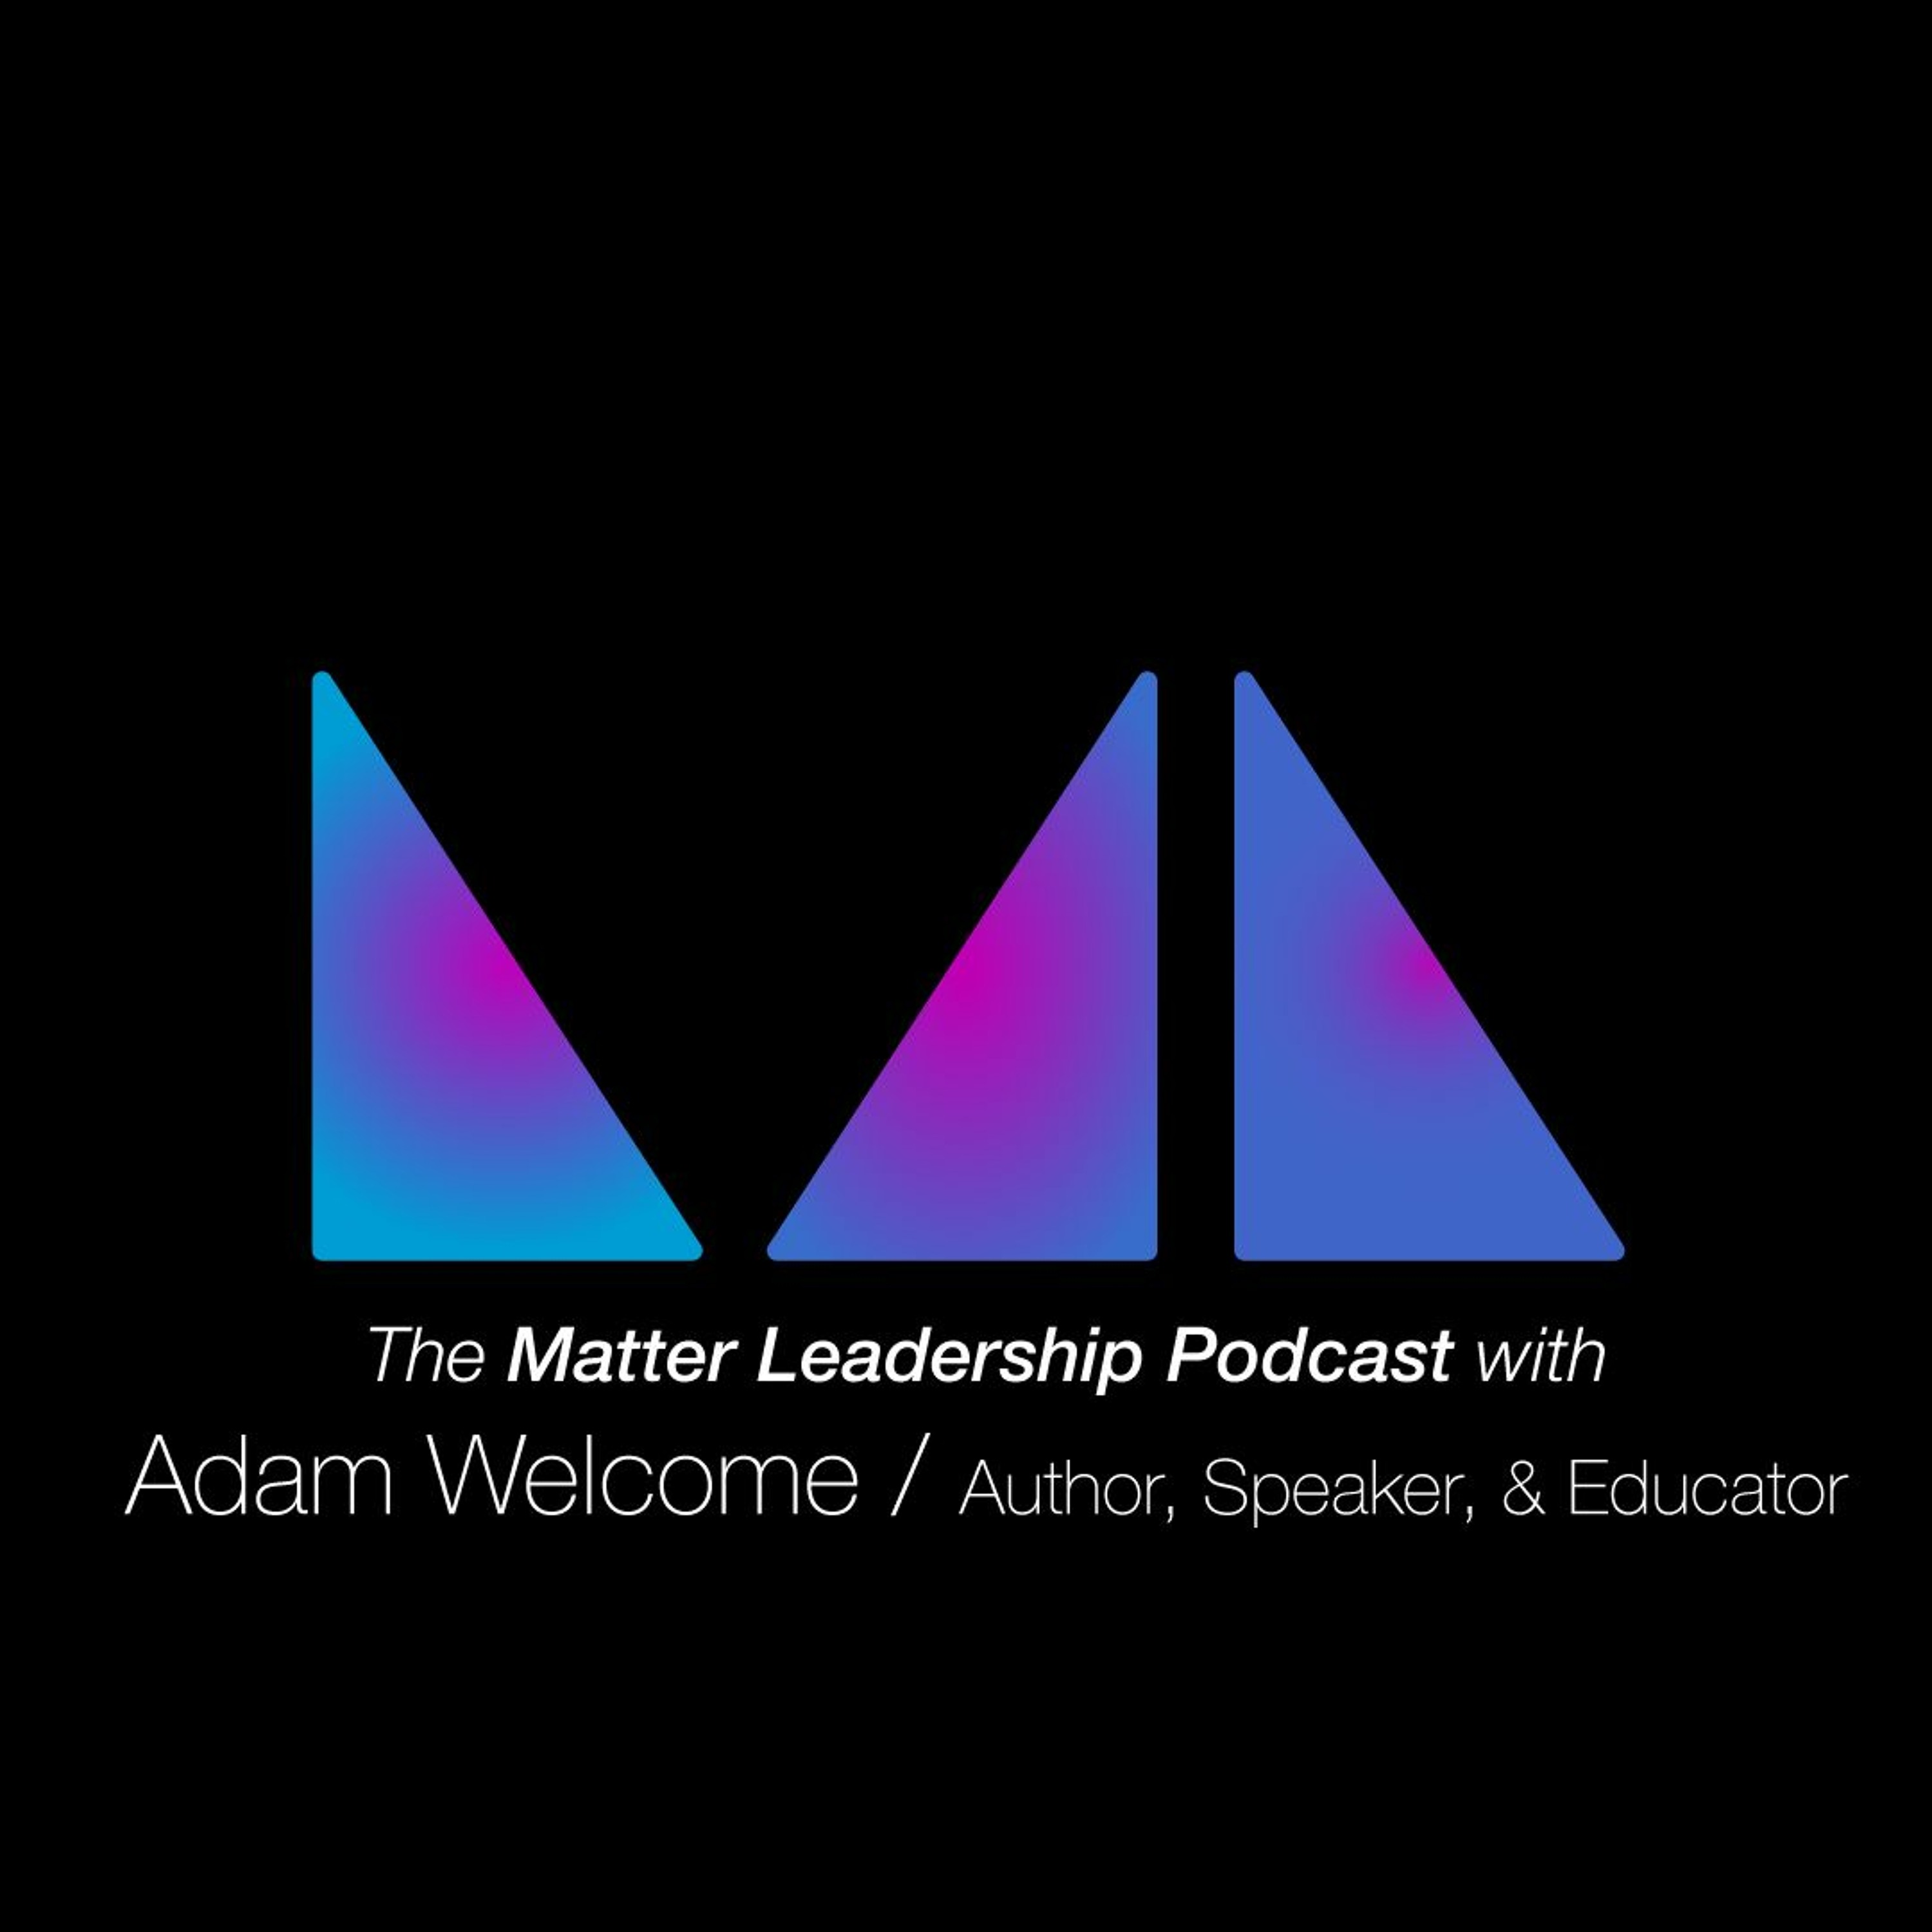 The Matter Leadership Podcast: Adam Welcome / Author, Speaker & Educator